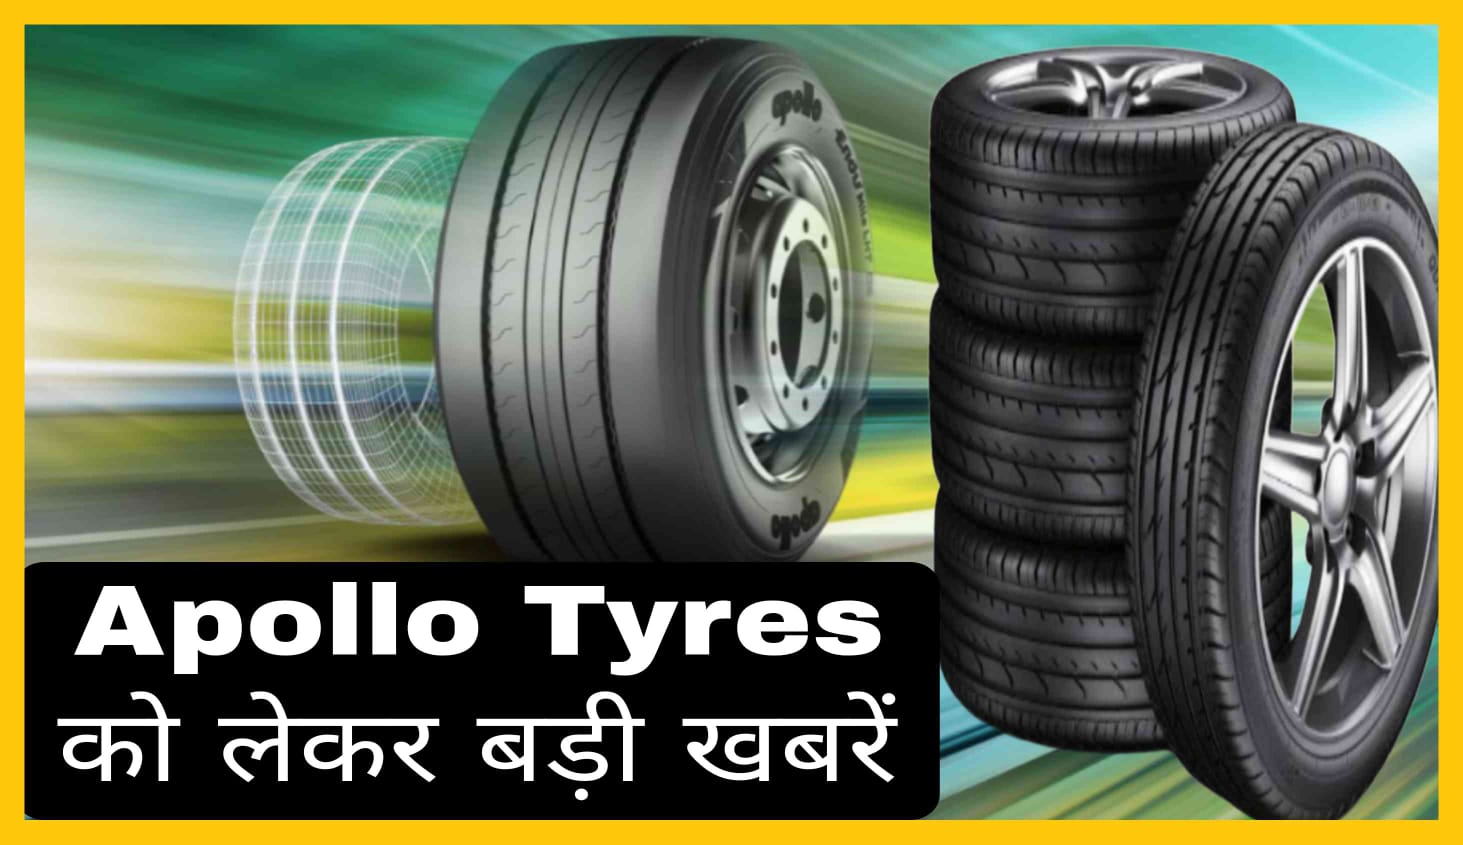 Big news about Apollo Tires Company